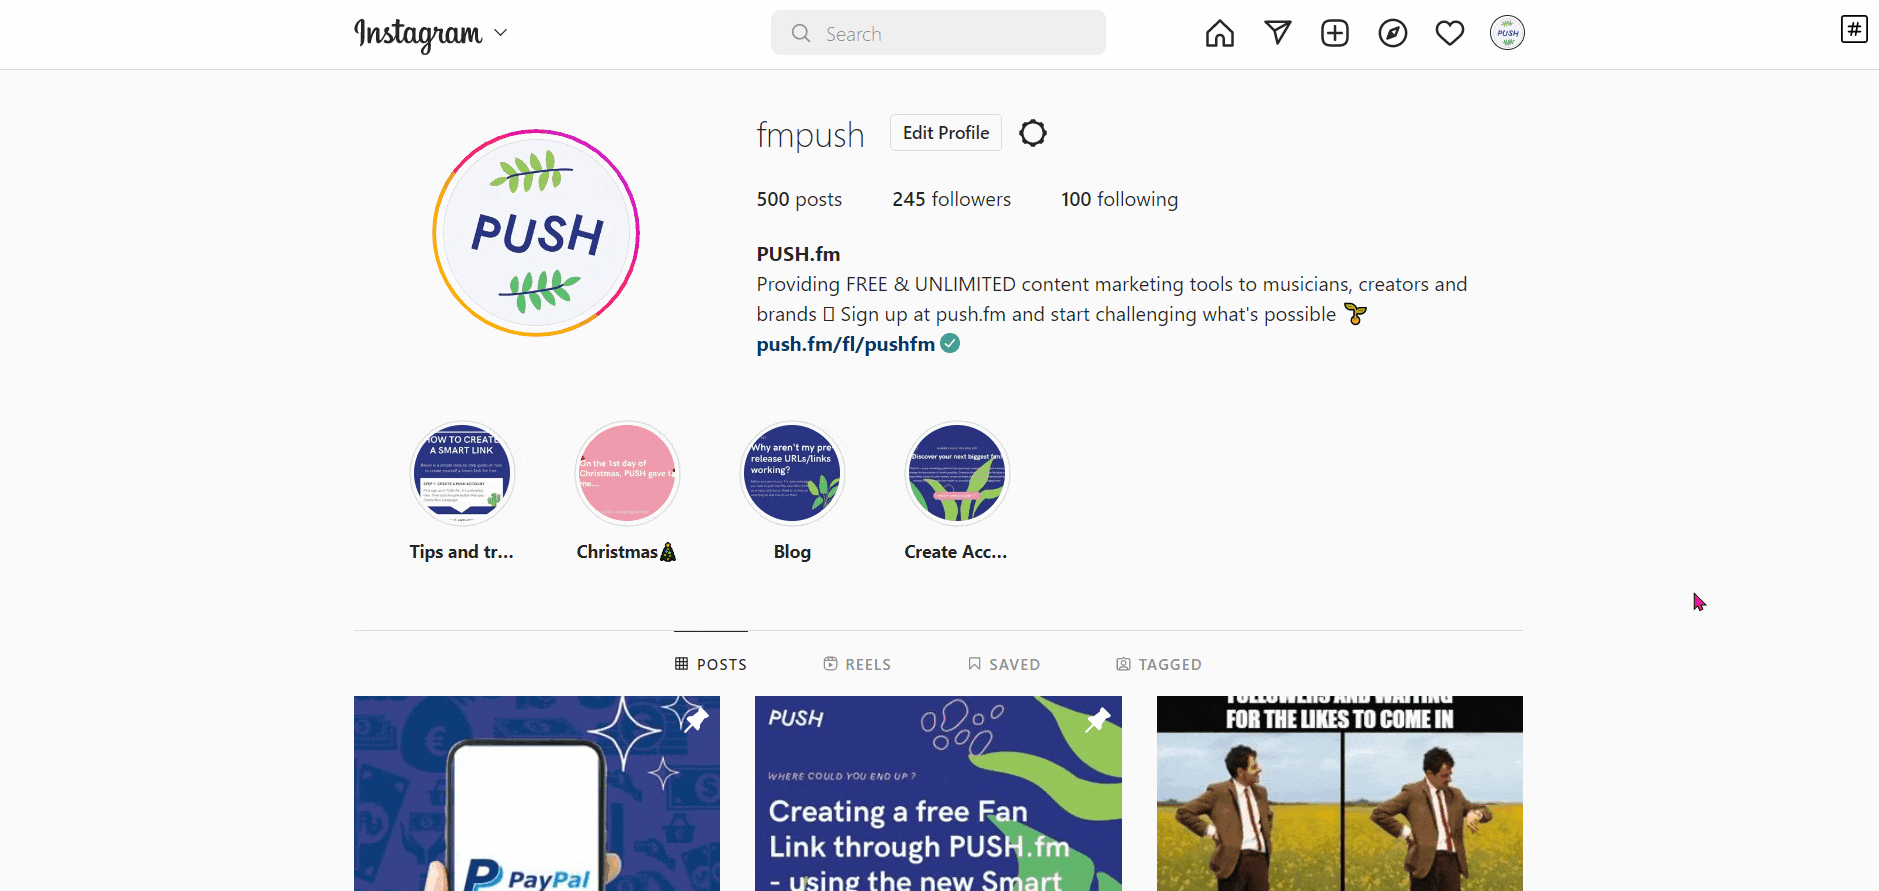 GIF showing PUSH.fm's Instagram account